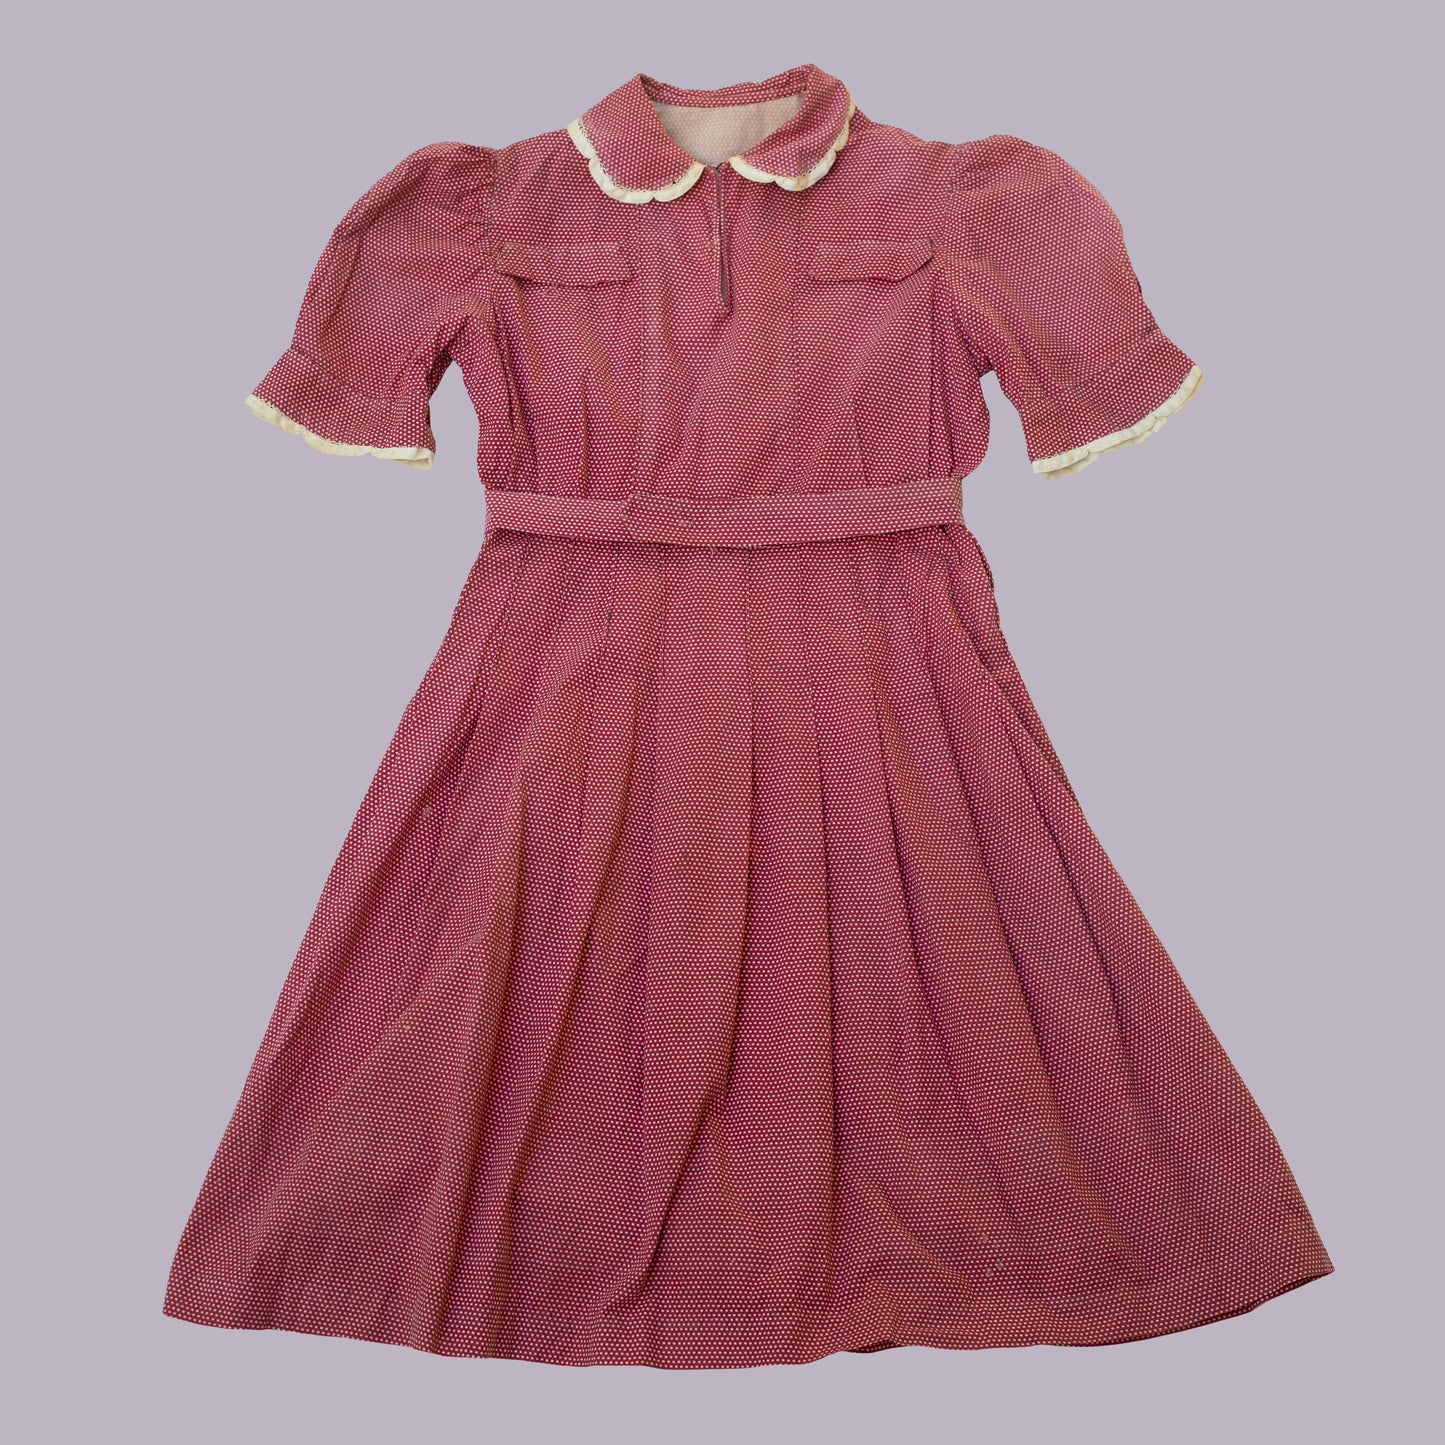 Vintage 1930s Red Cotton Polka Dot Mini Dress